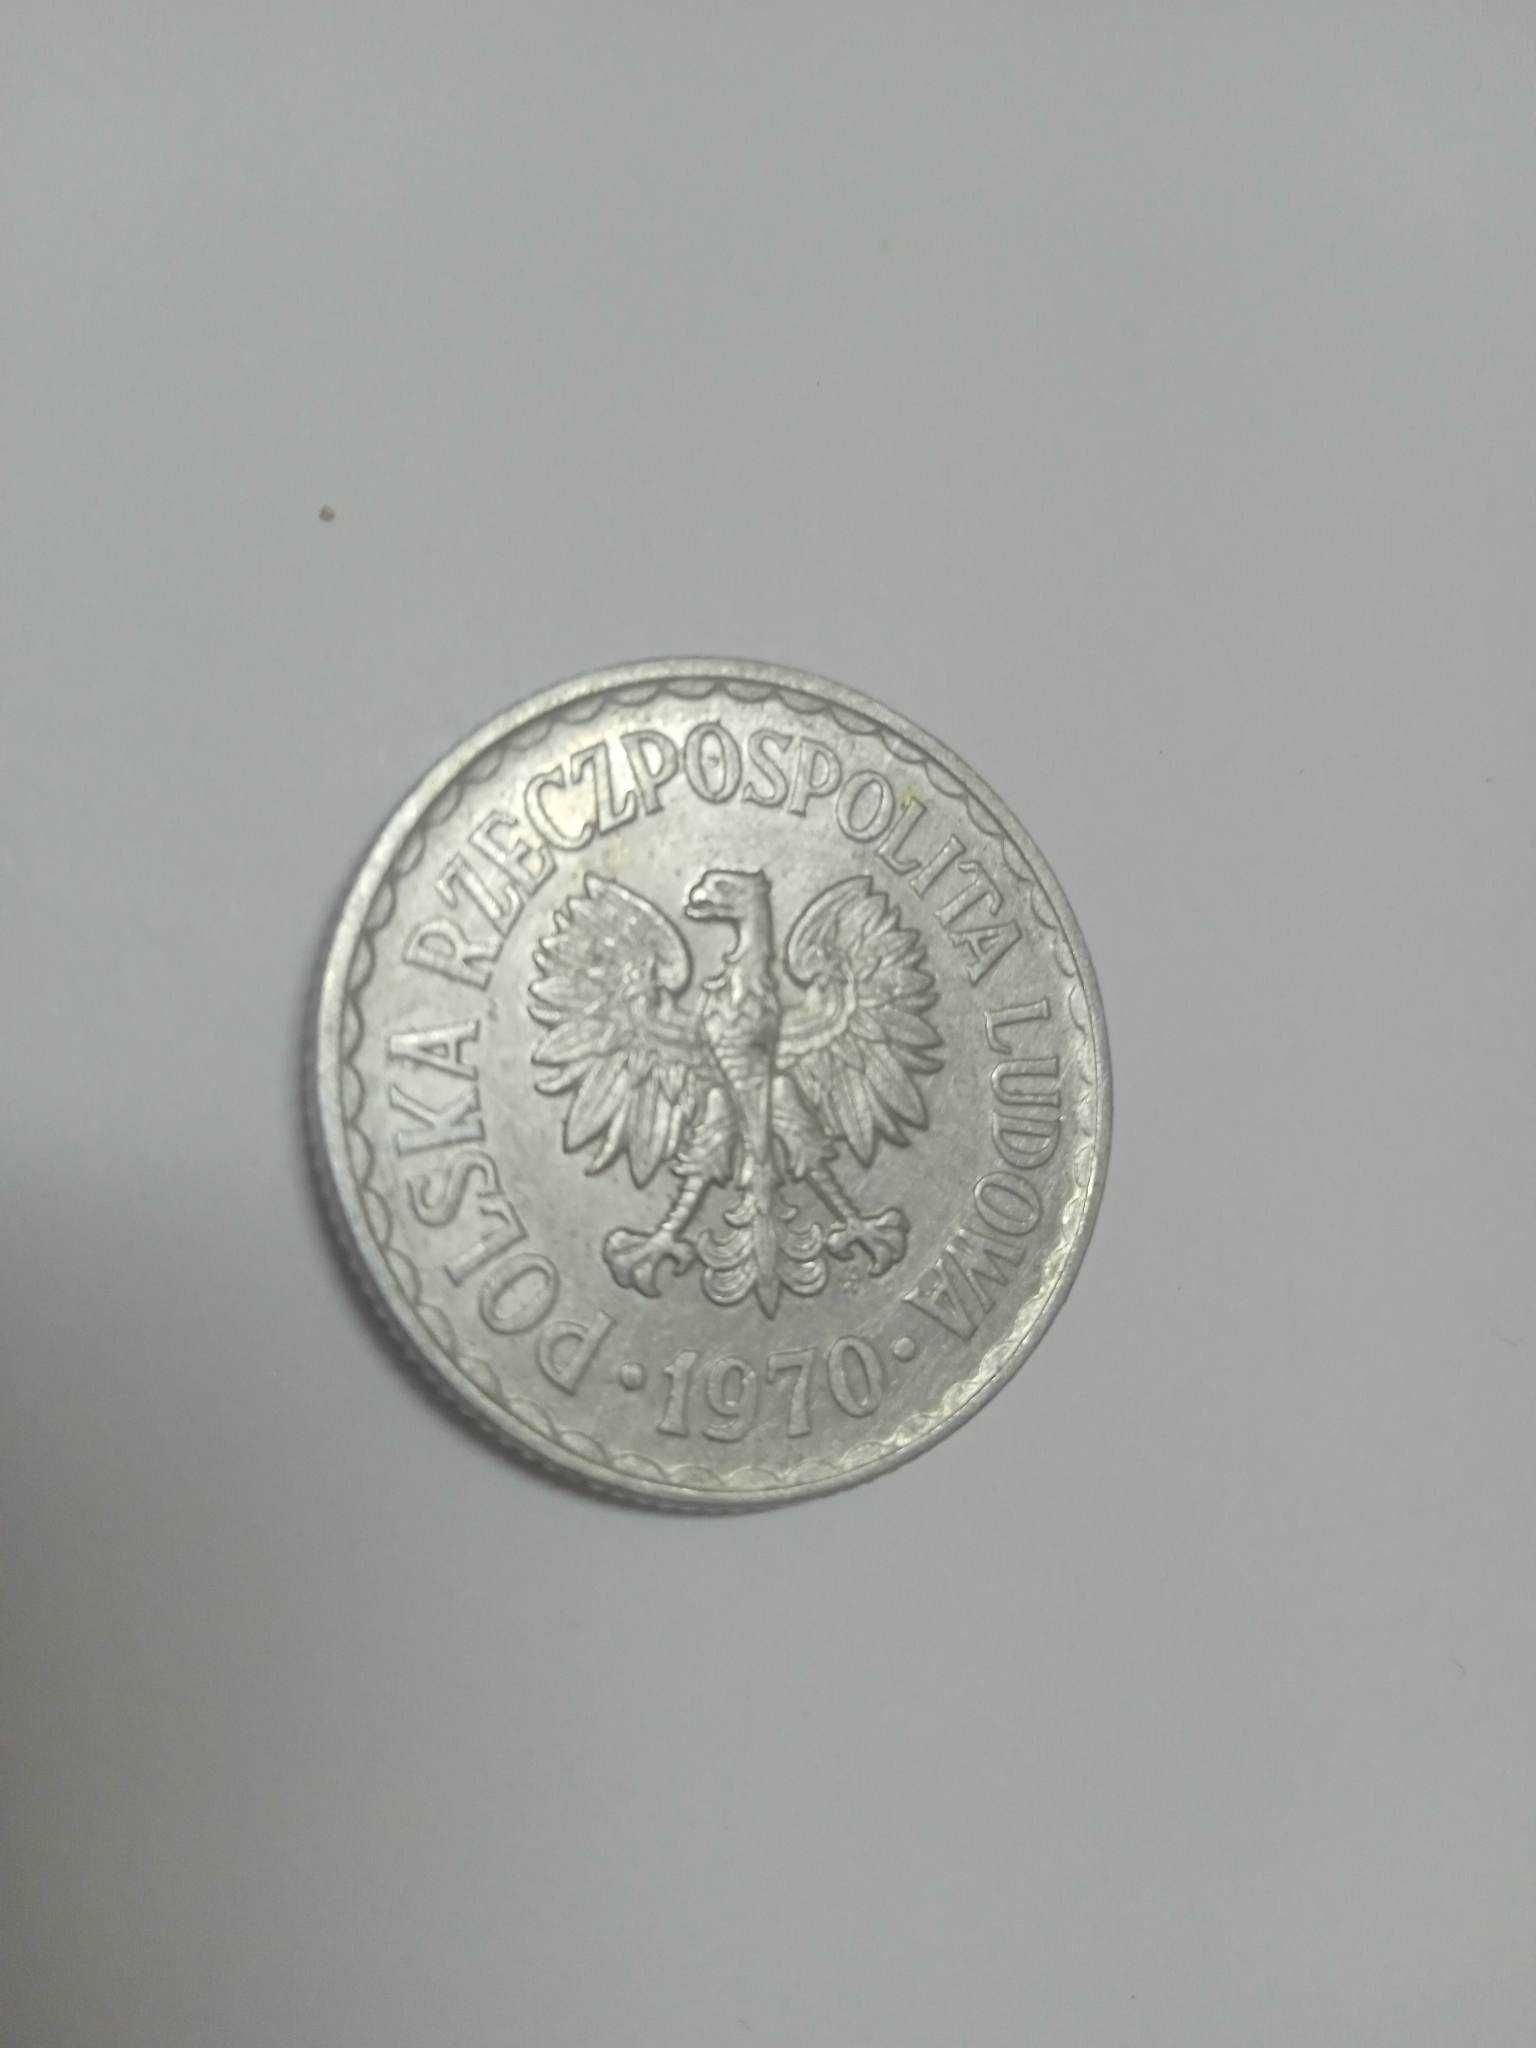 Moneta 1 zł z 1970 roku